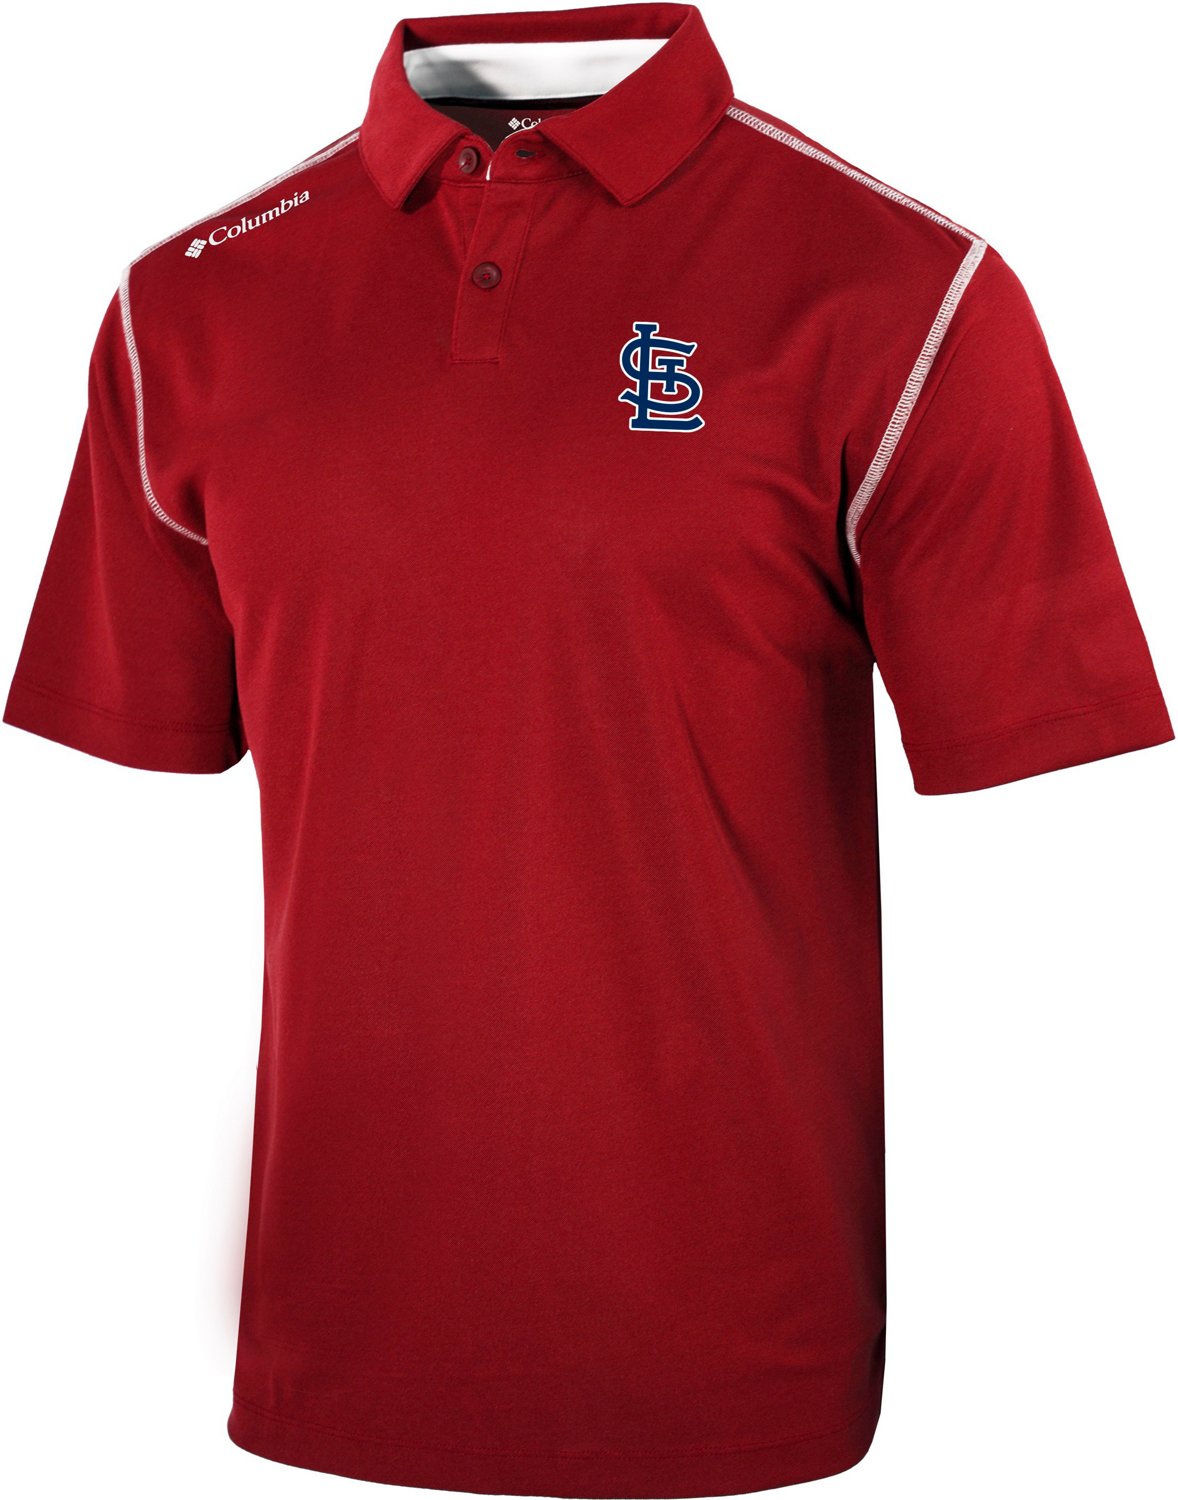 Columbia Sportswear Men's St. Louis Cardinals Shotgun Polo Shirt